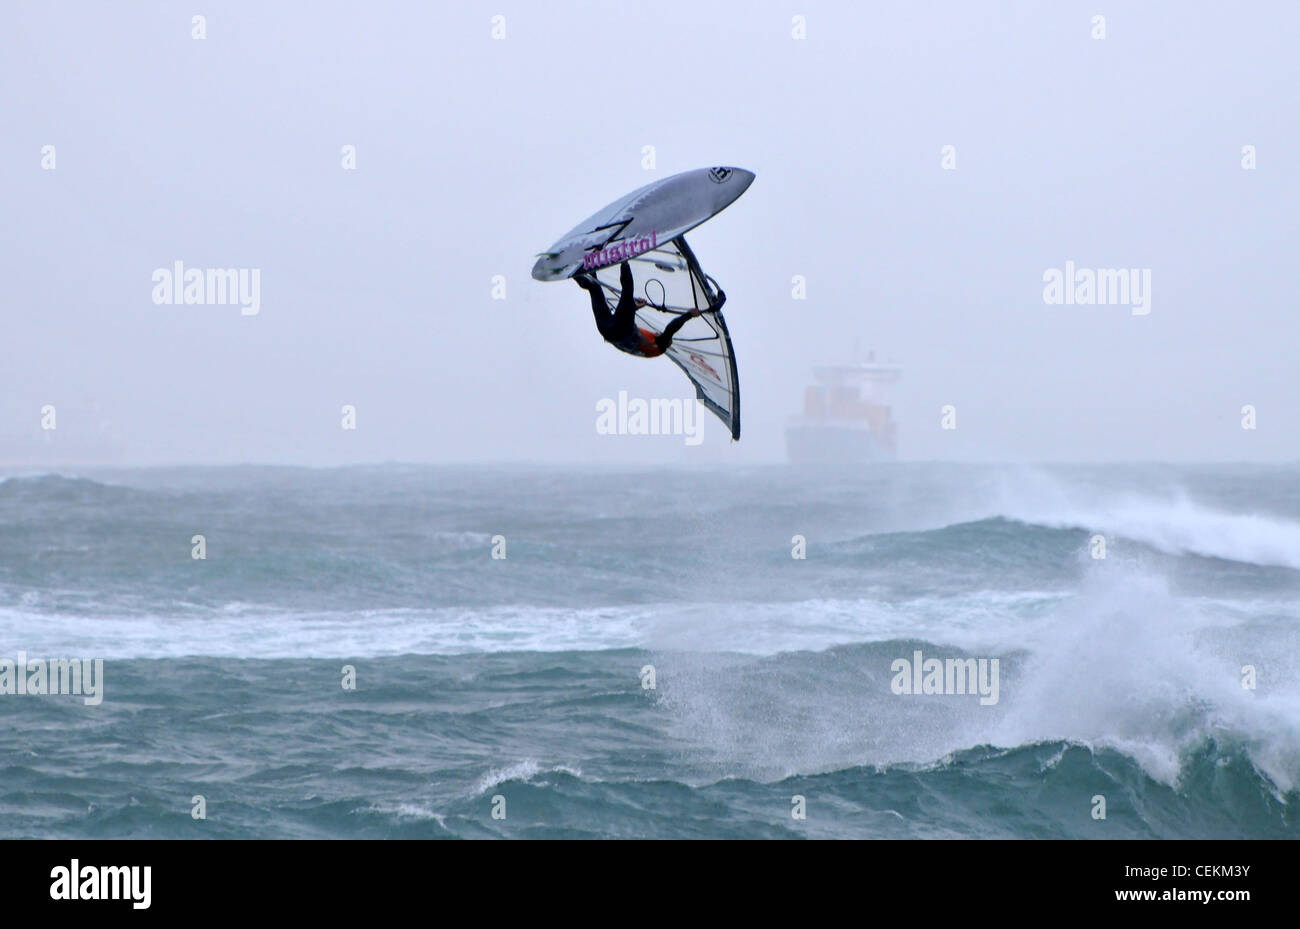 Storm Rider 2012, l israeliano wind surf la concorrenza in Bat Galim, Haifa.Febbraio 17, 2012 . Foto di Shay prelievo Foto Stock